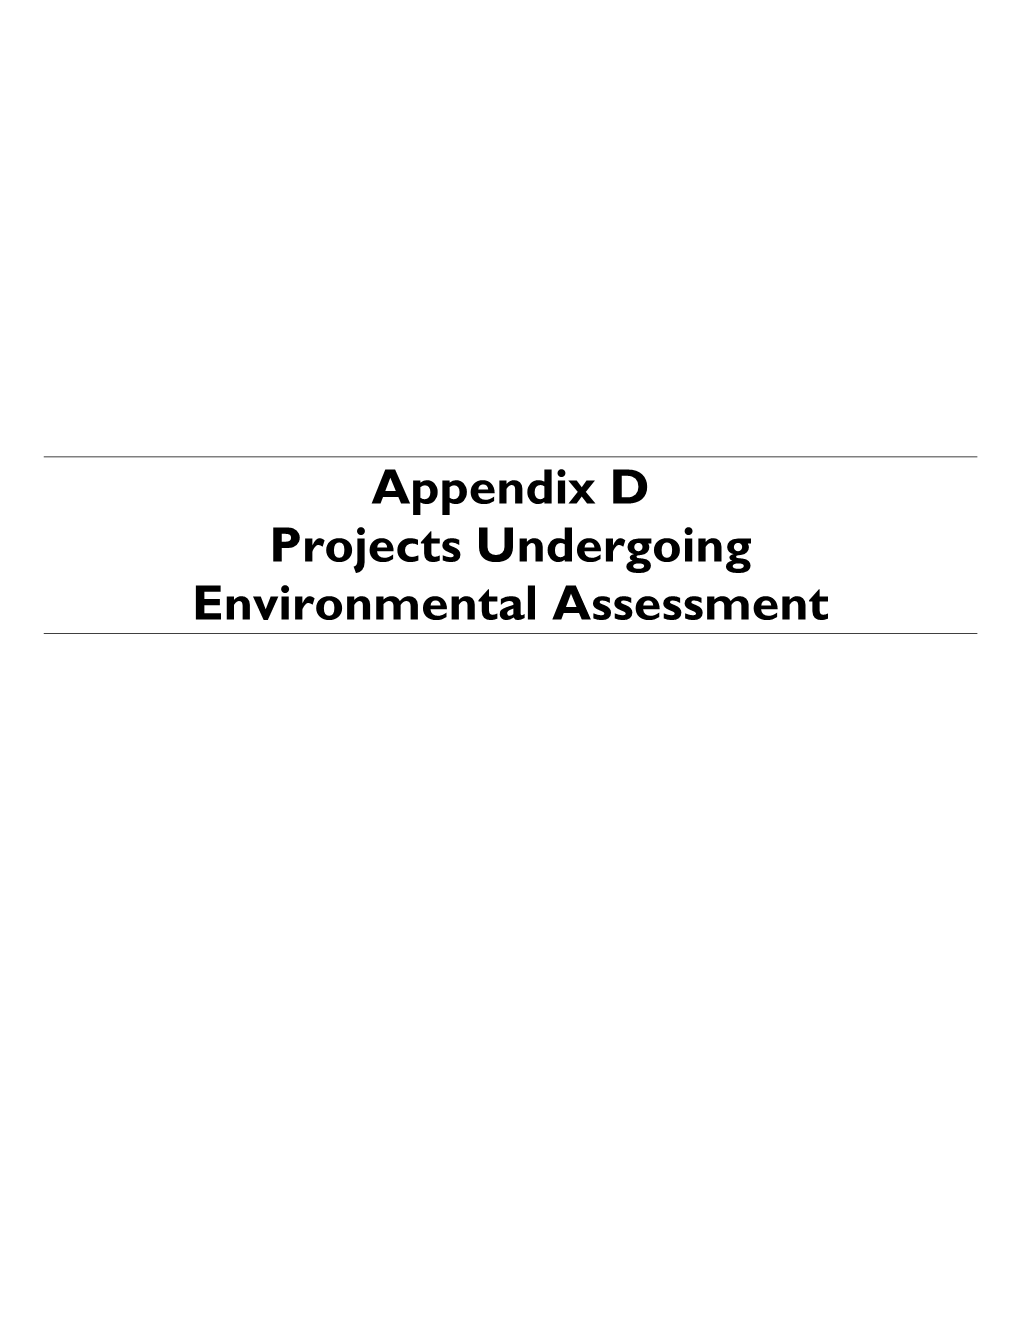 Appendix D Projects Undergoing Environmental Assessment